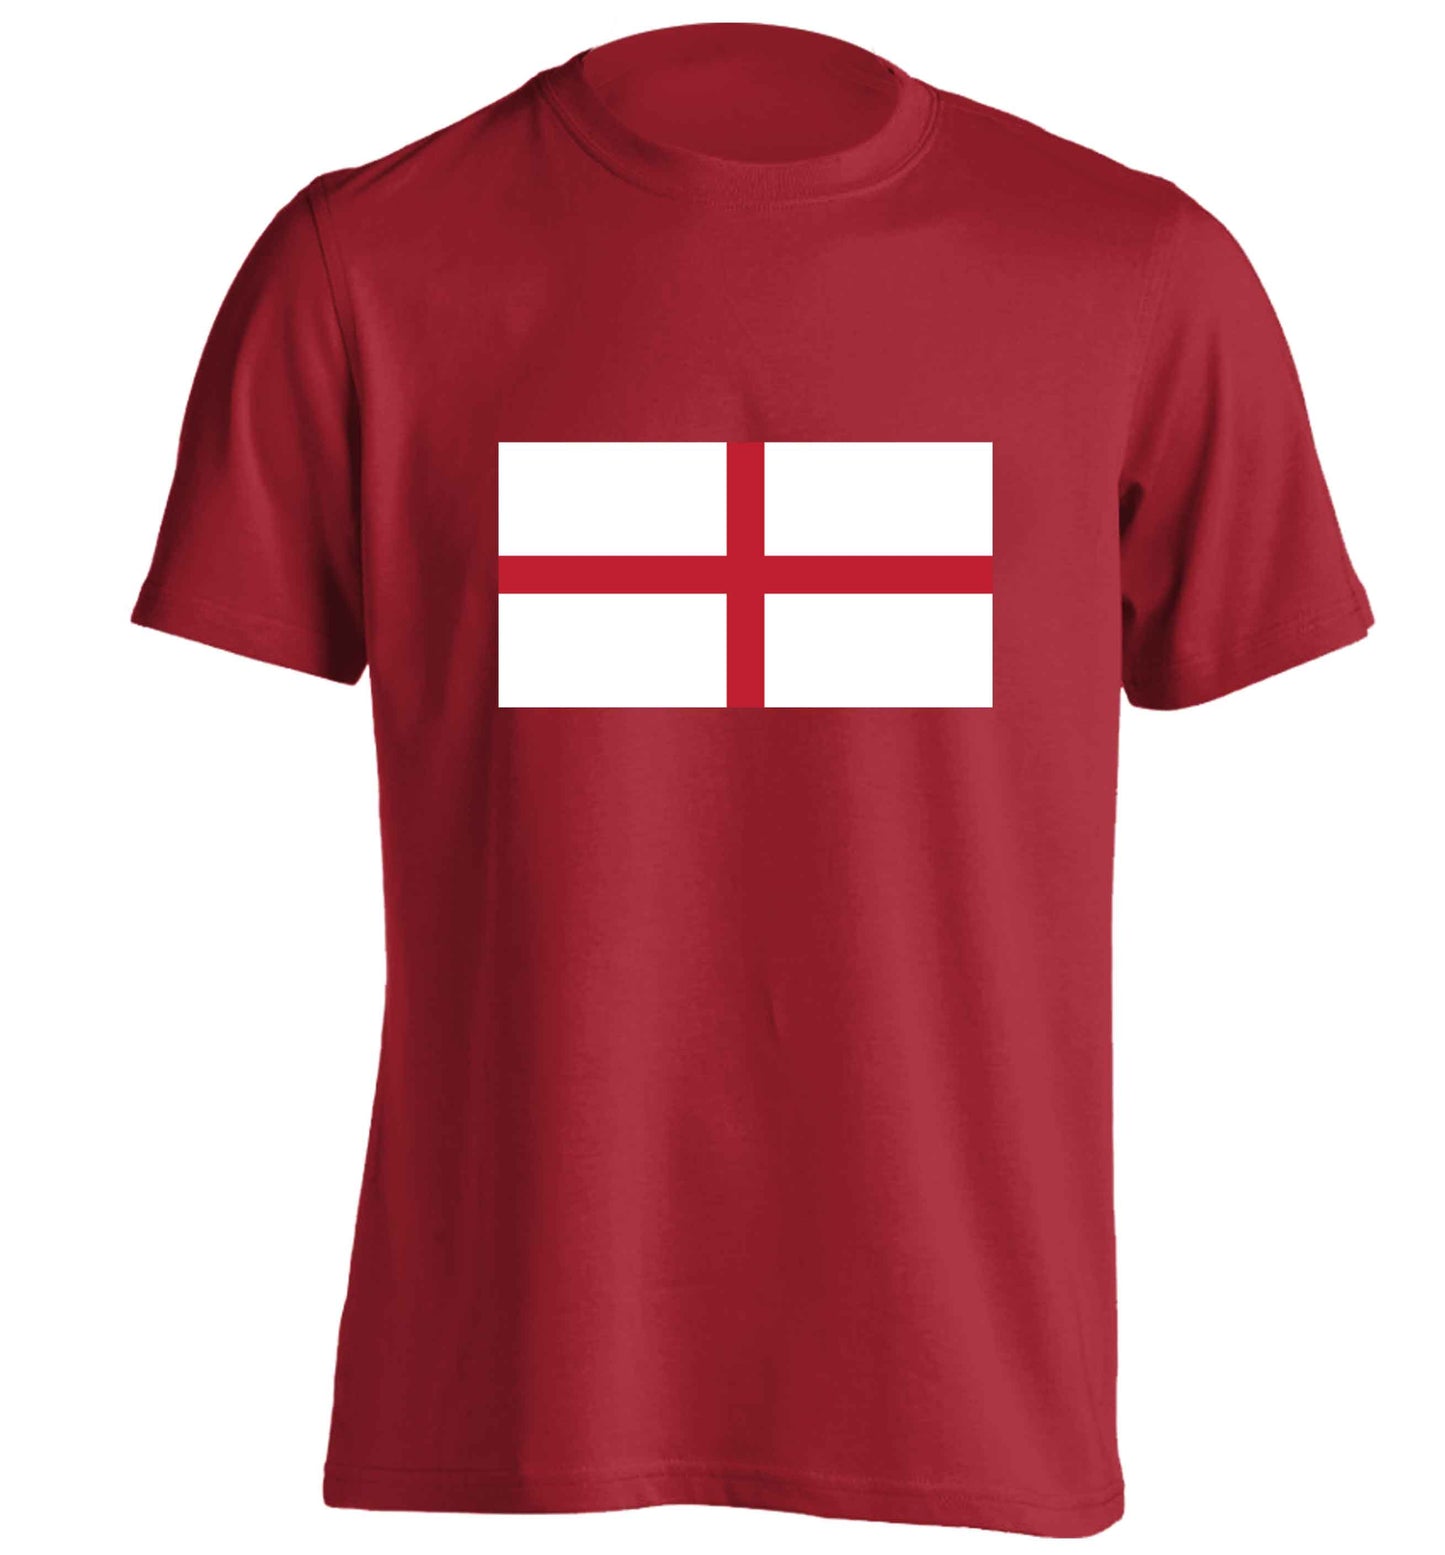 England Flag adults unisex red Tshirt 2XL